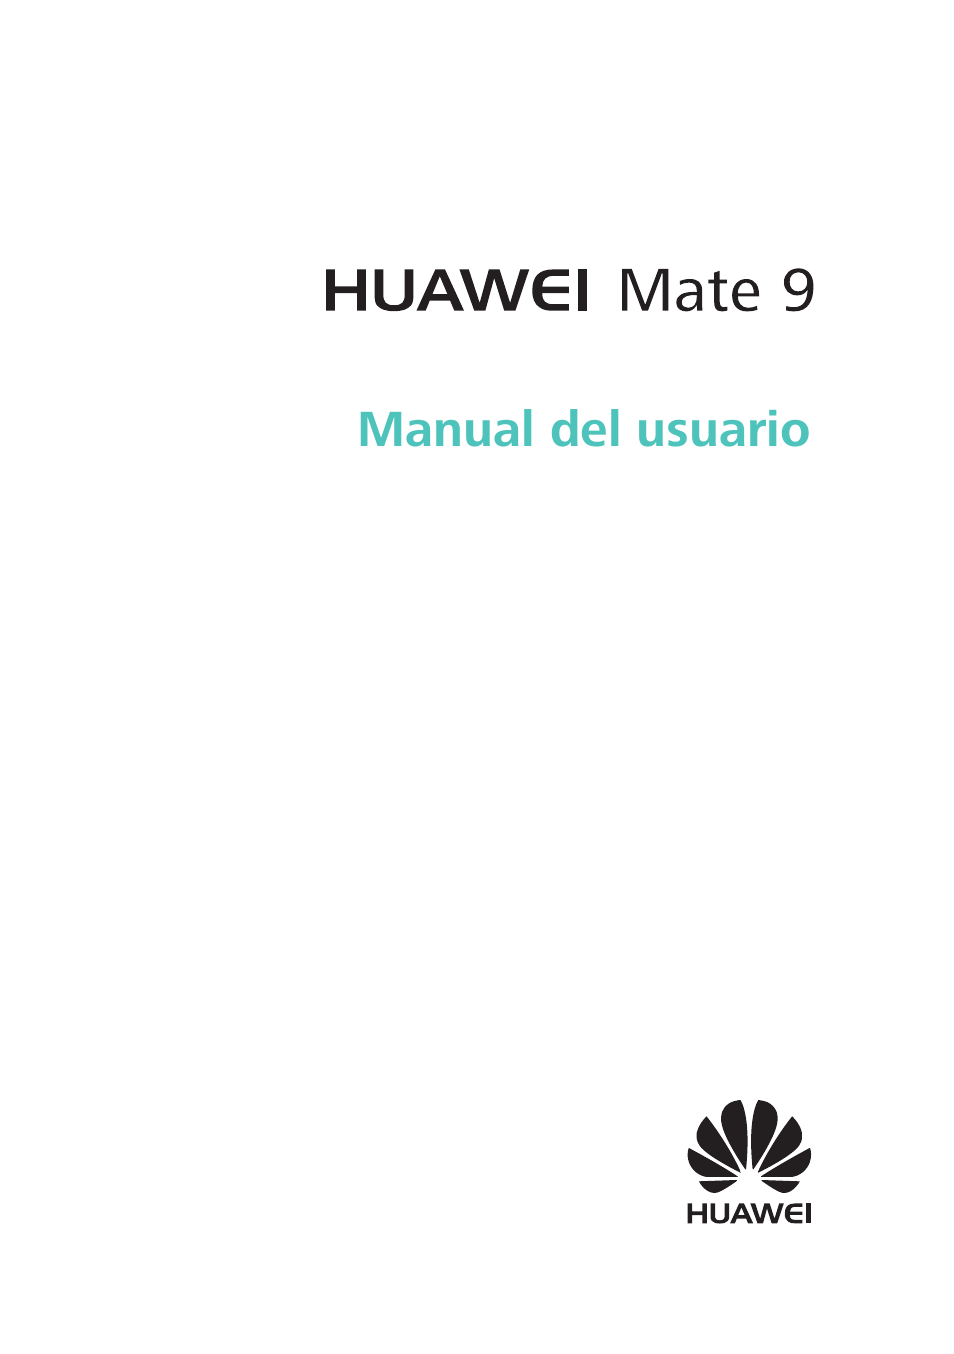 Huawei Mate 9 Pro Manual del usuario | Páginas: 214